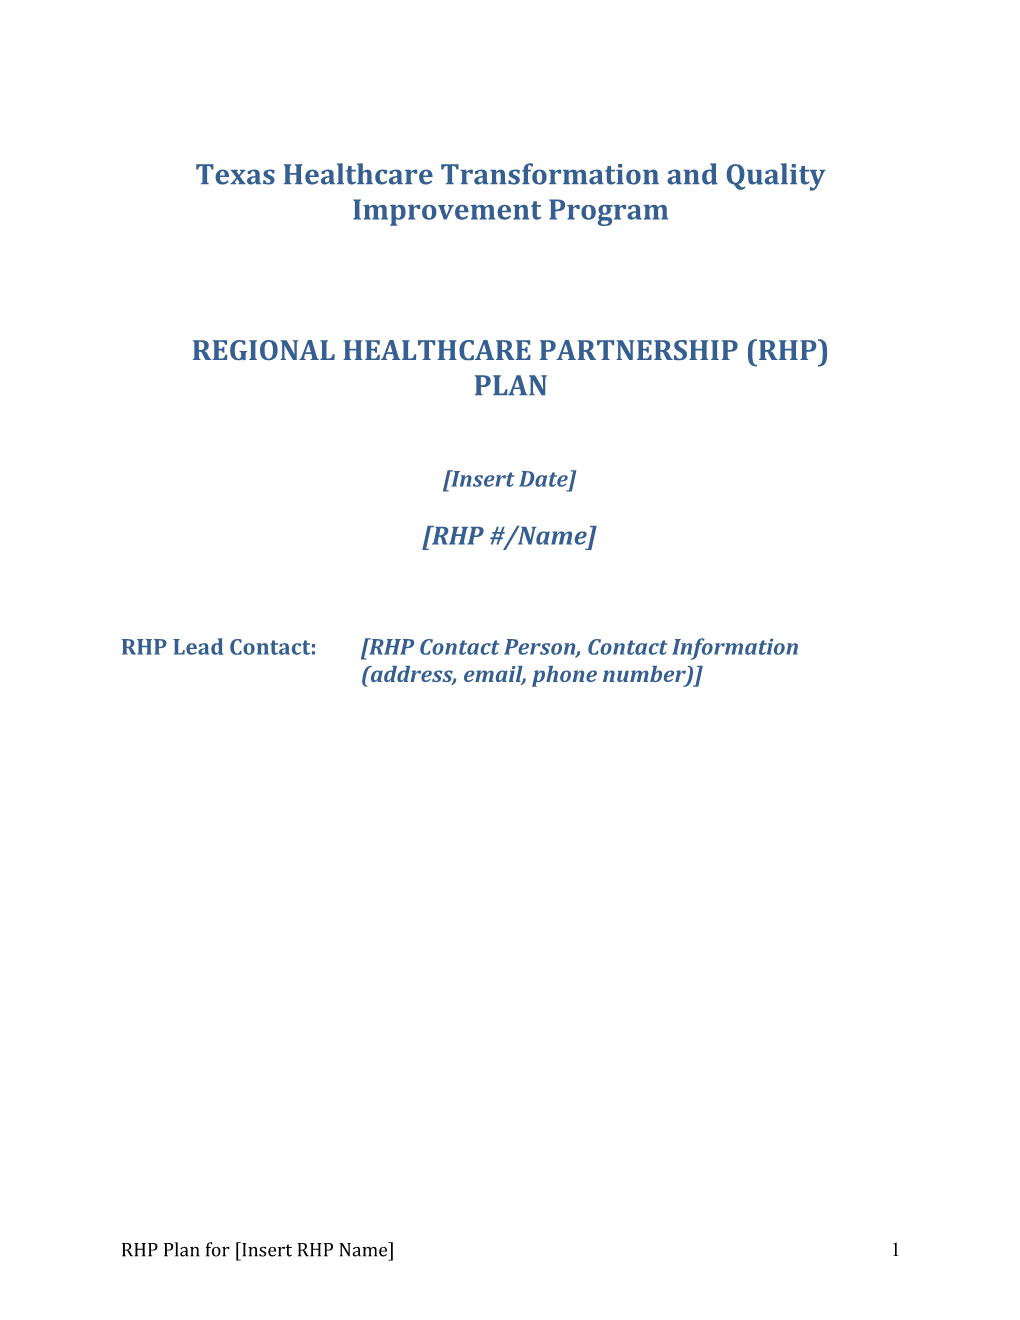 Regional Healthcare Partnership